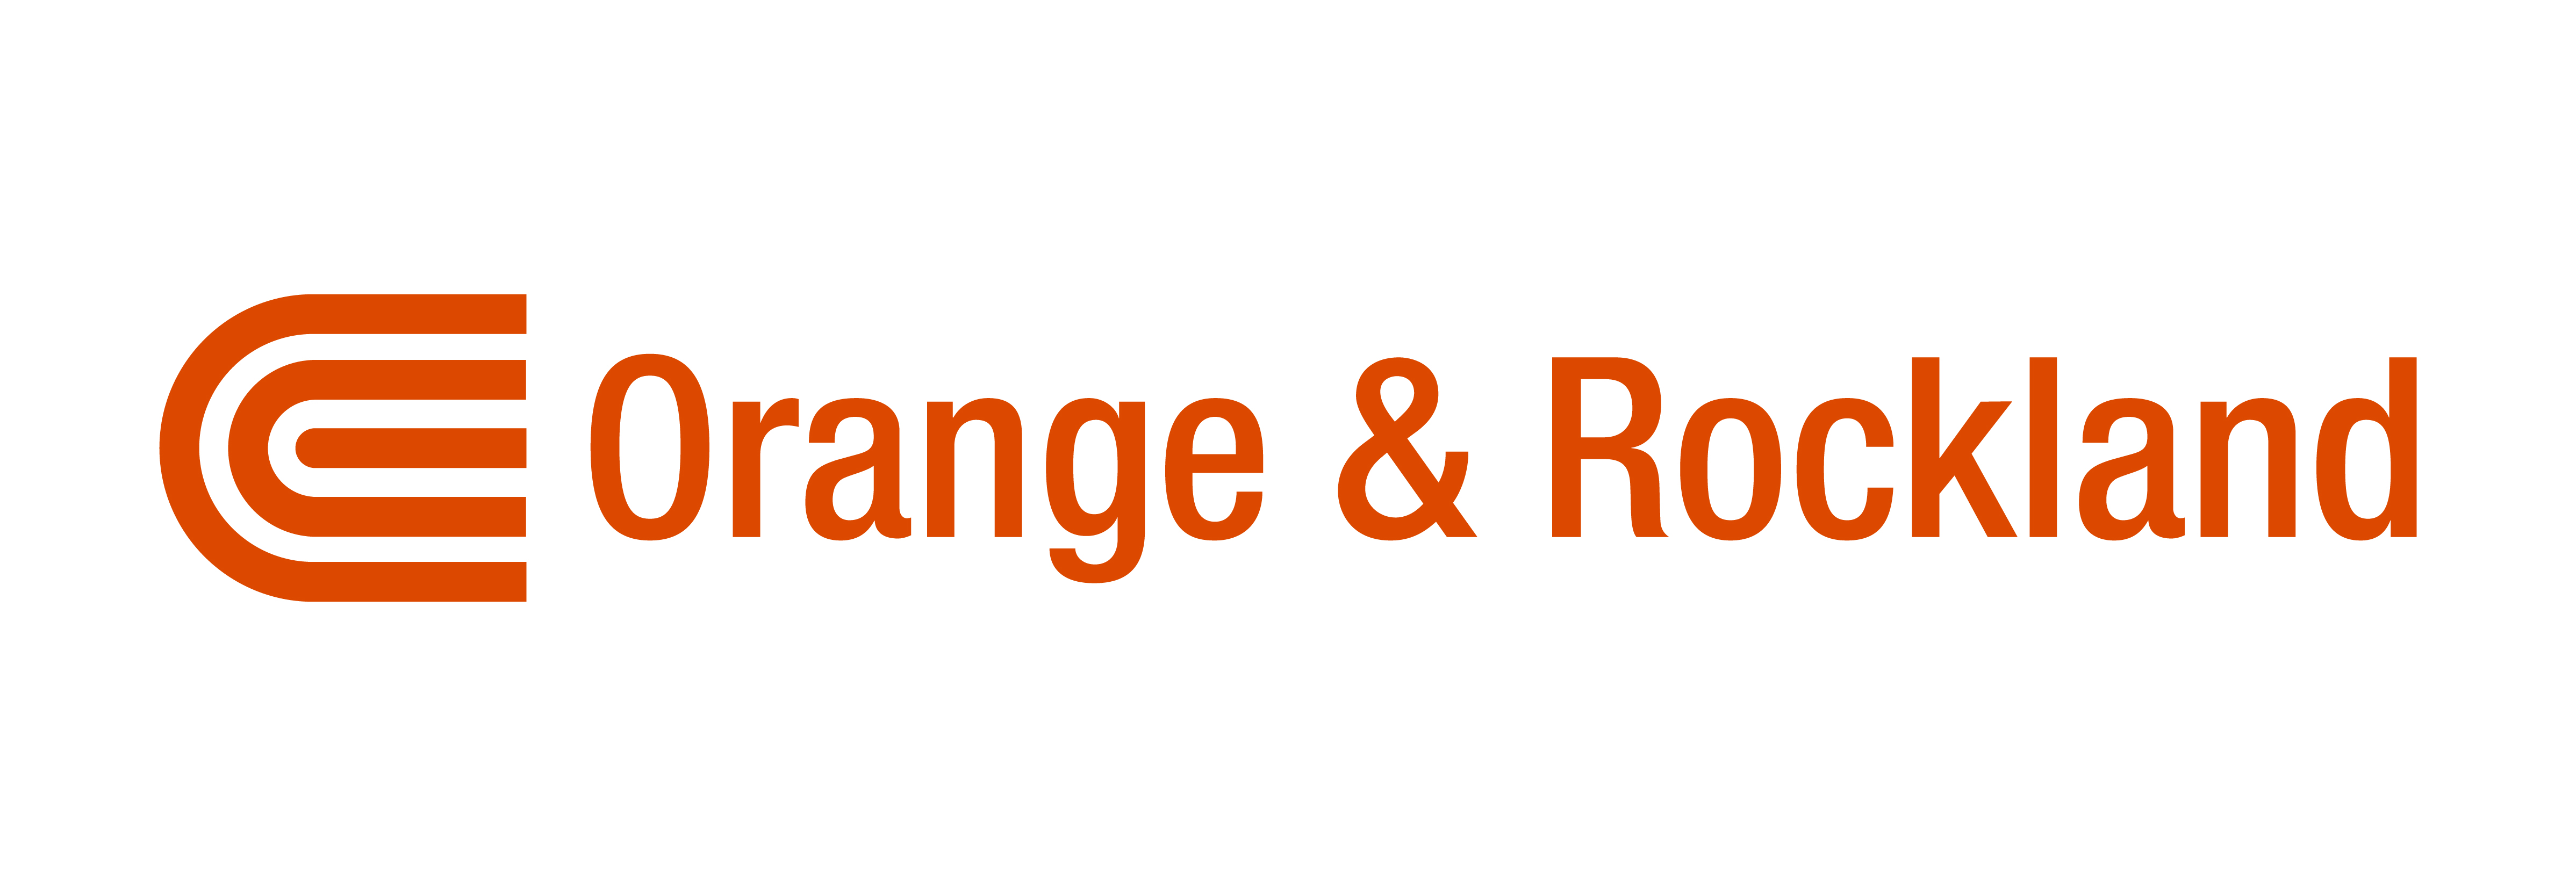 Orange Rockland Instant Rebate Icf Energy InstantRebate Web